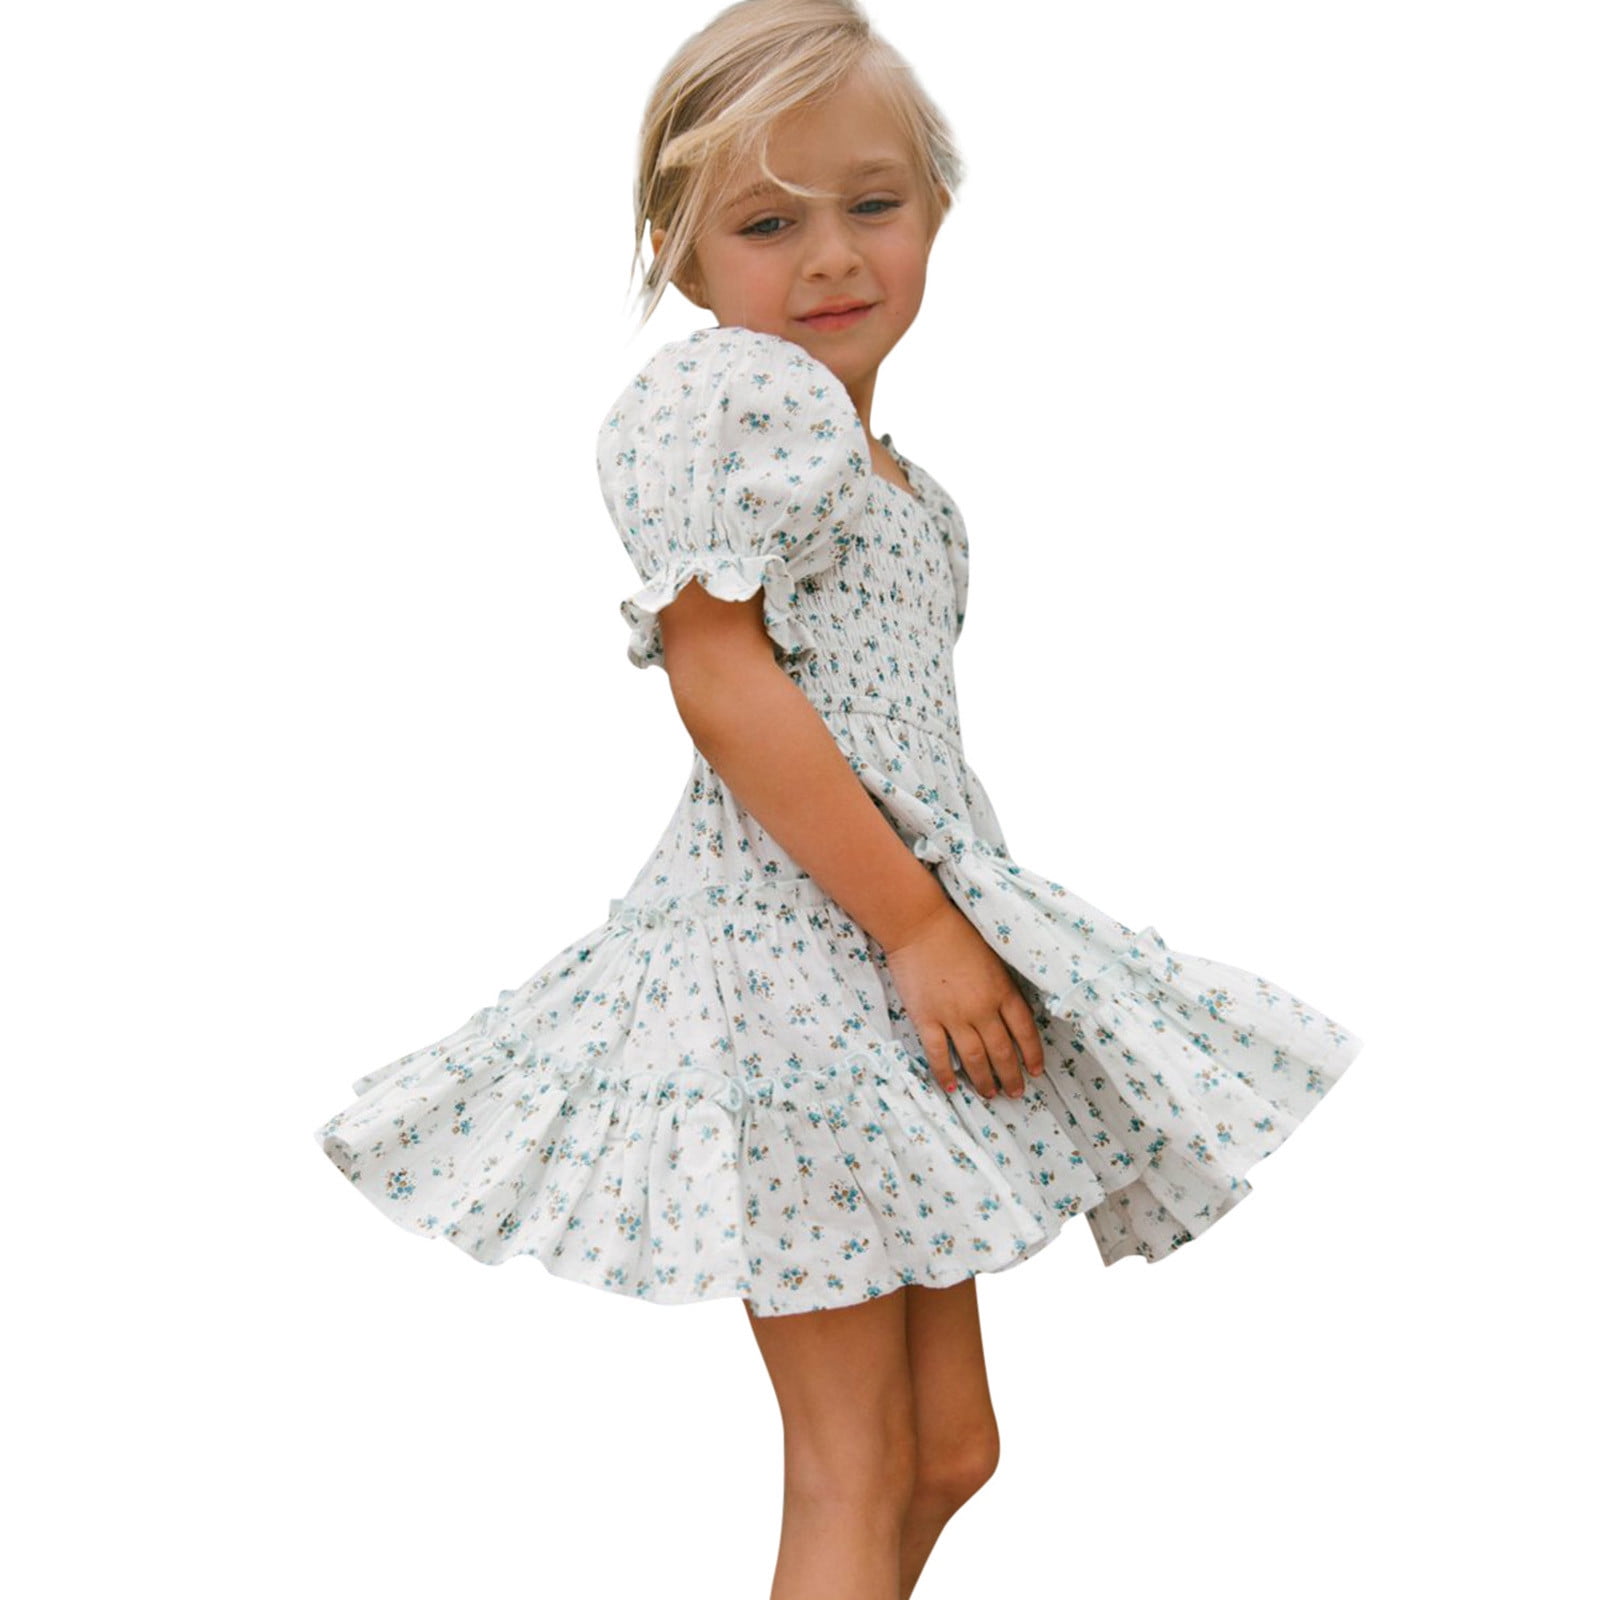 Kids Ball Gowns in Agege - Children's Clothing, Lizbeth Design | Jiji.ng